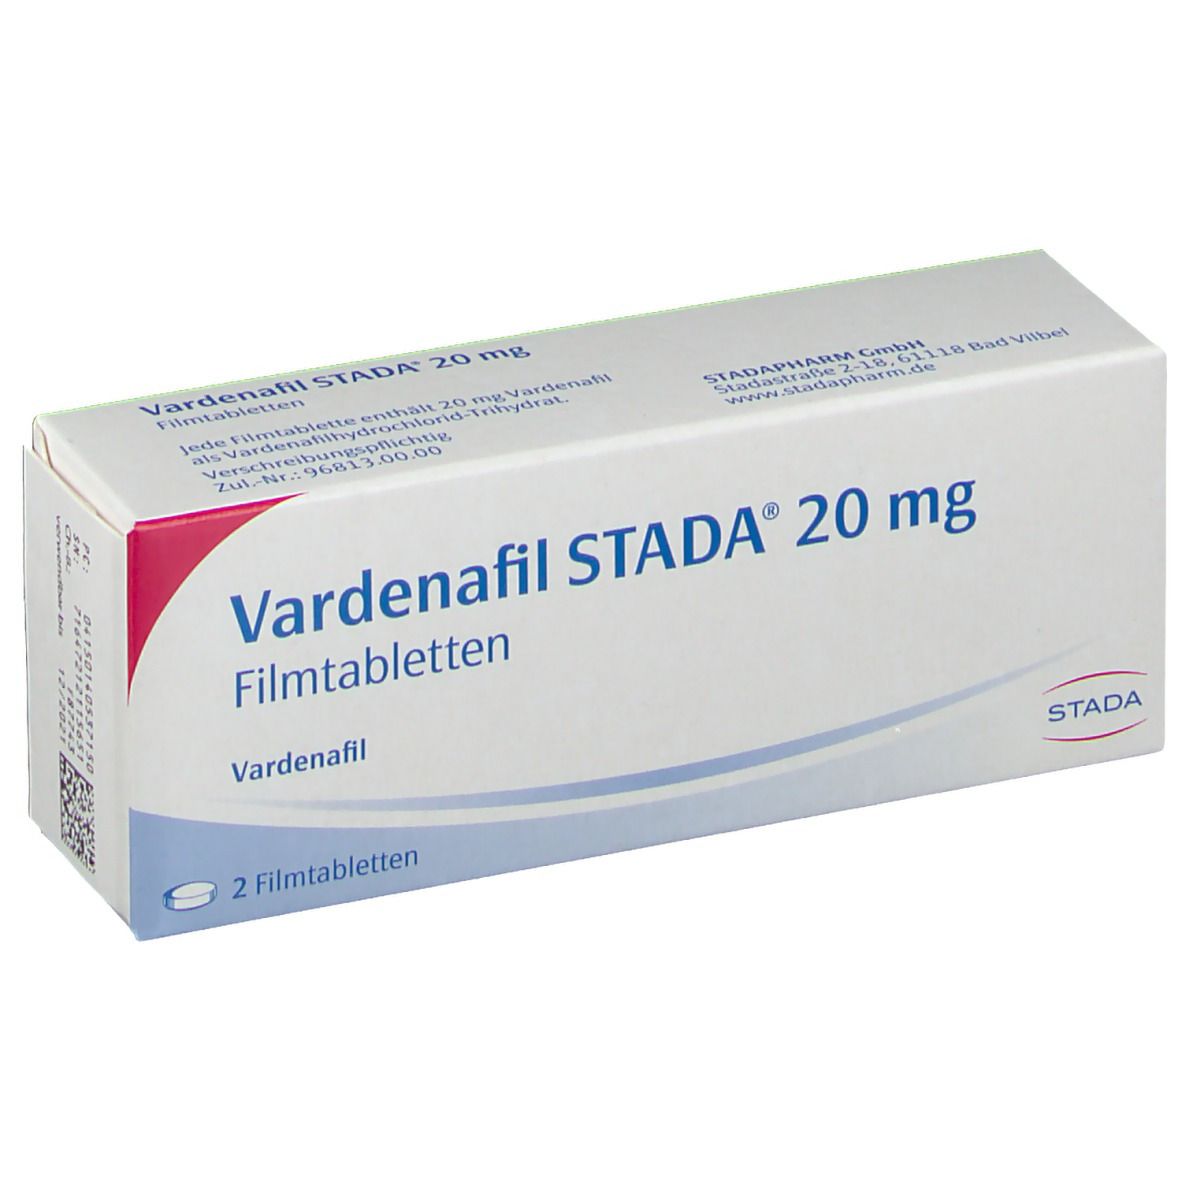 Vardenafil STADA® 20 mg